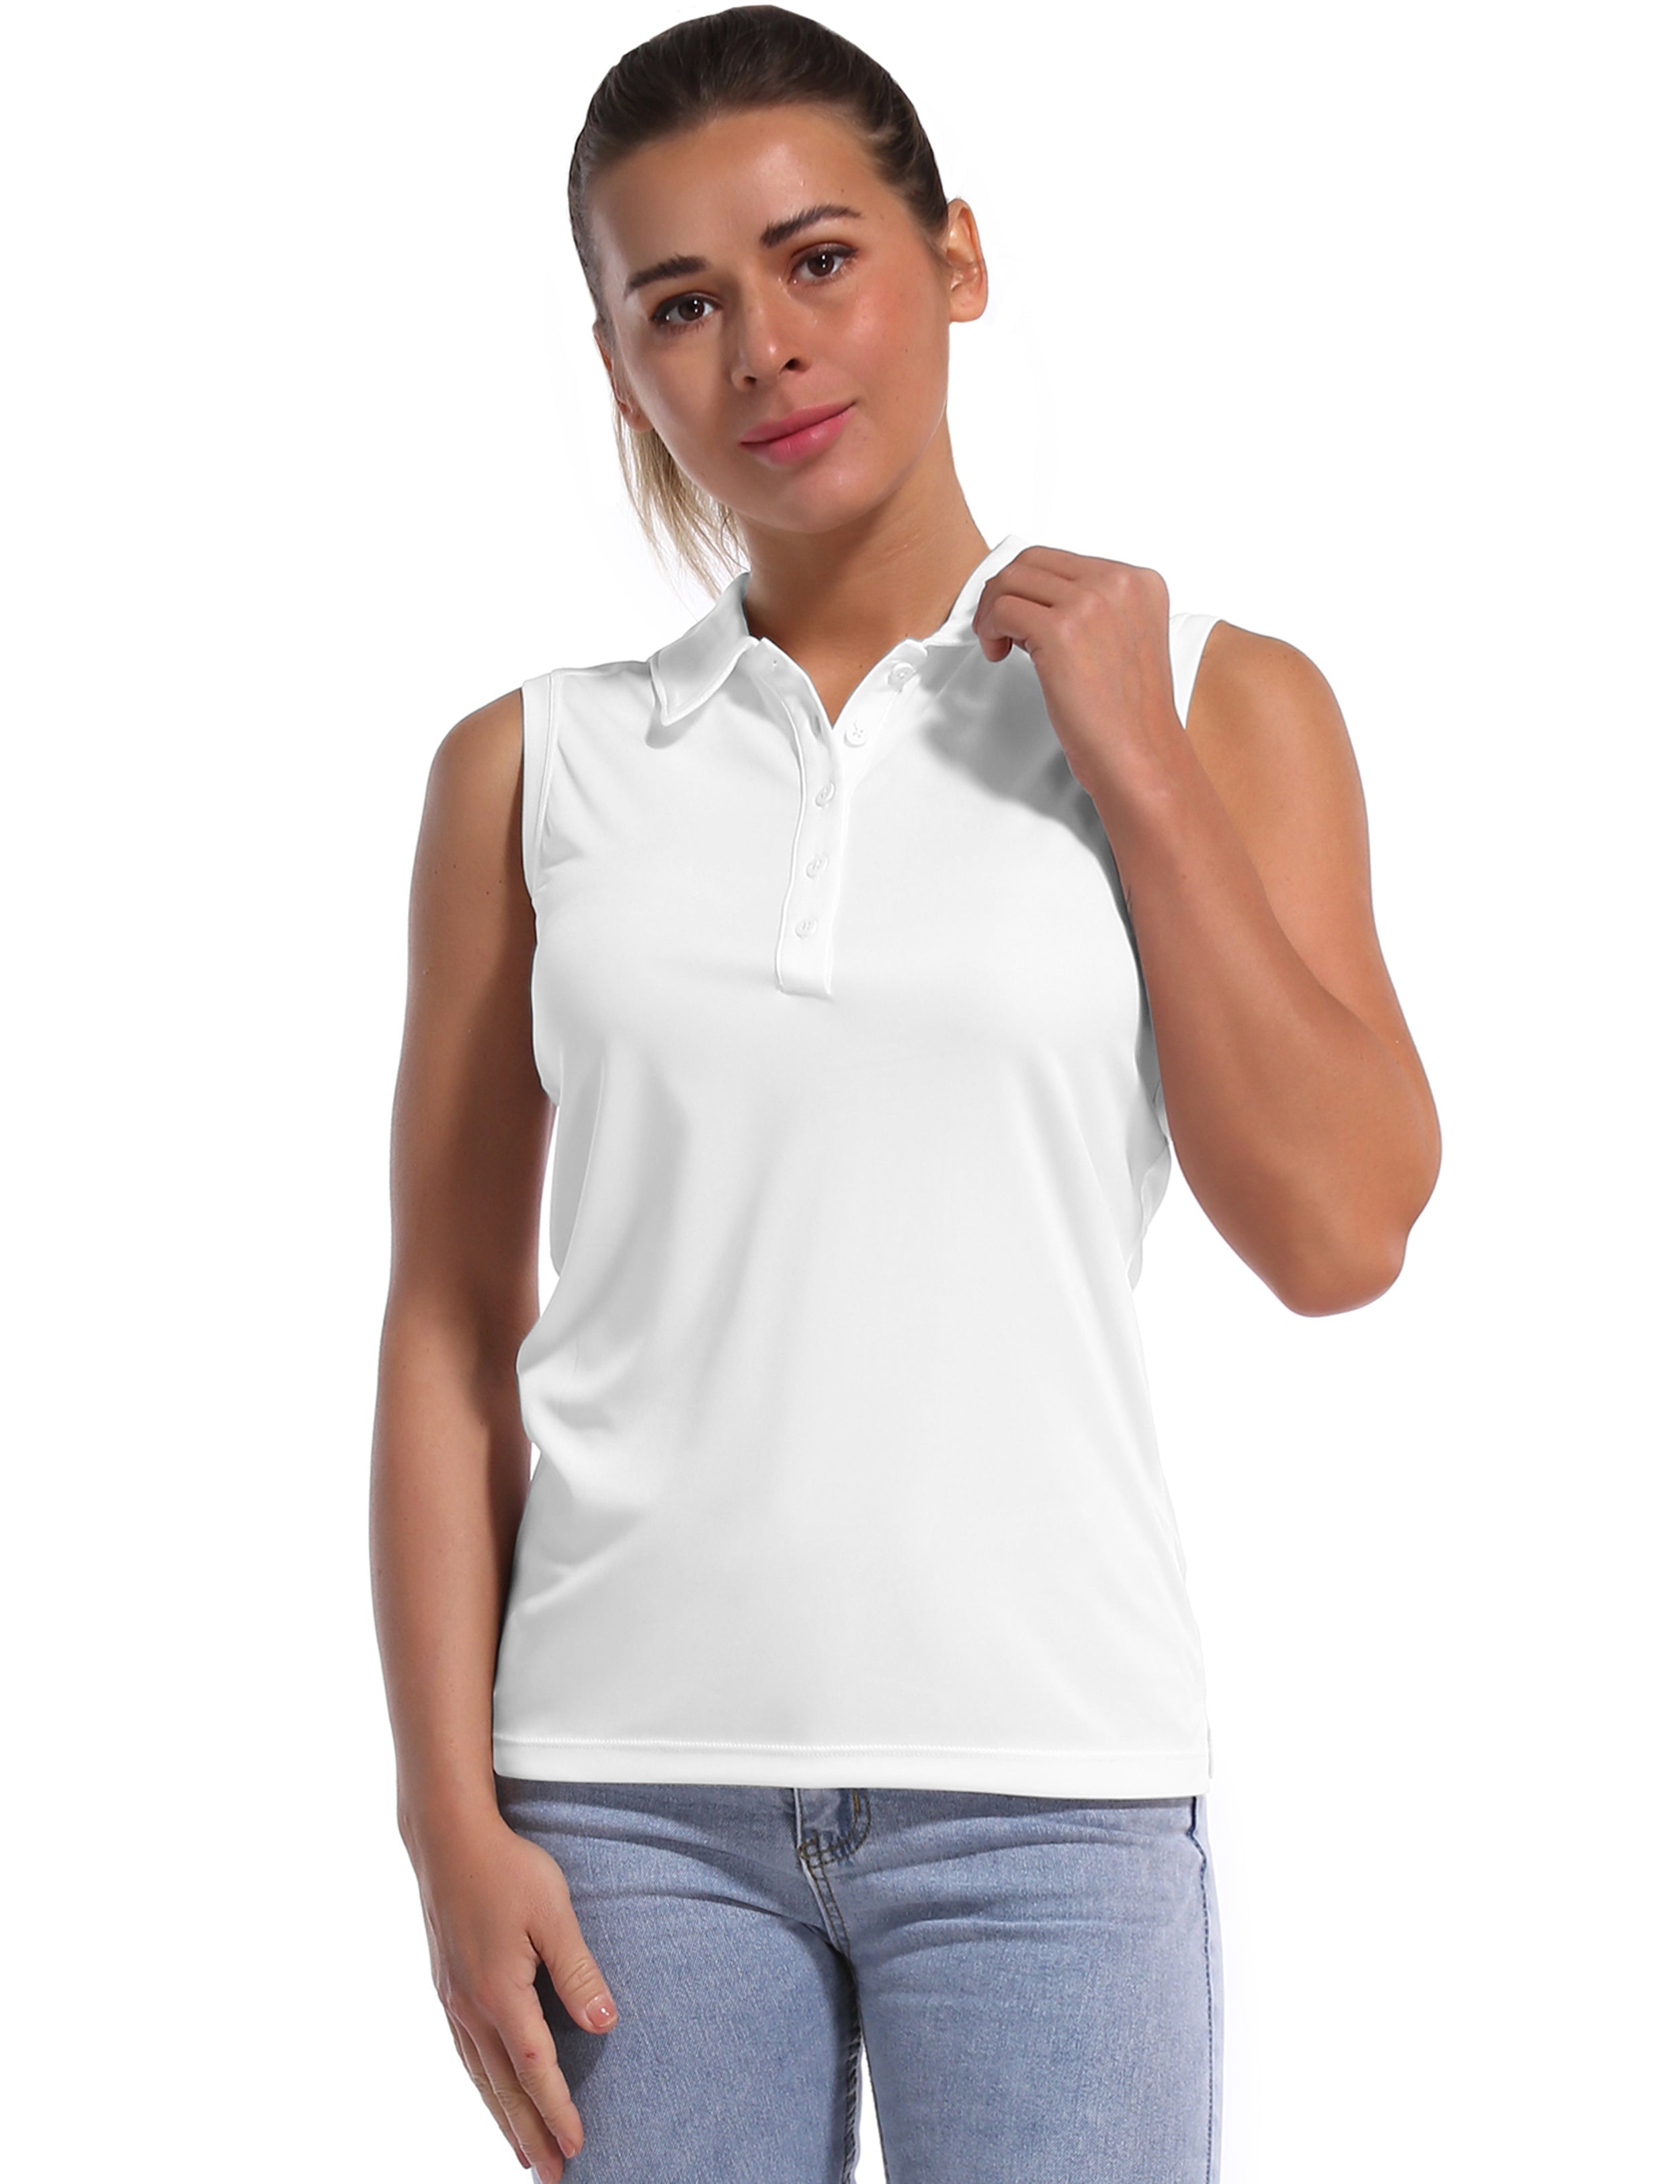 Sleeveless Slim Fit Polo Shirt white ins_Golf